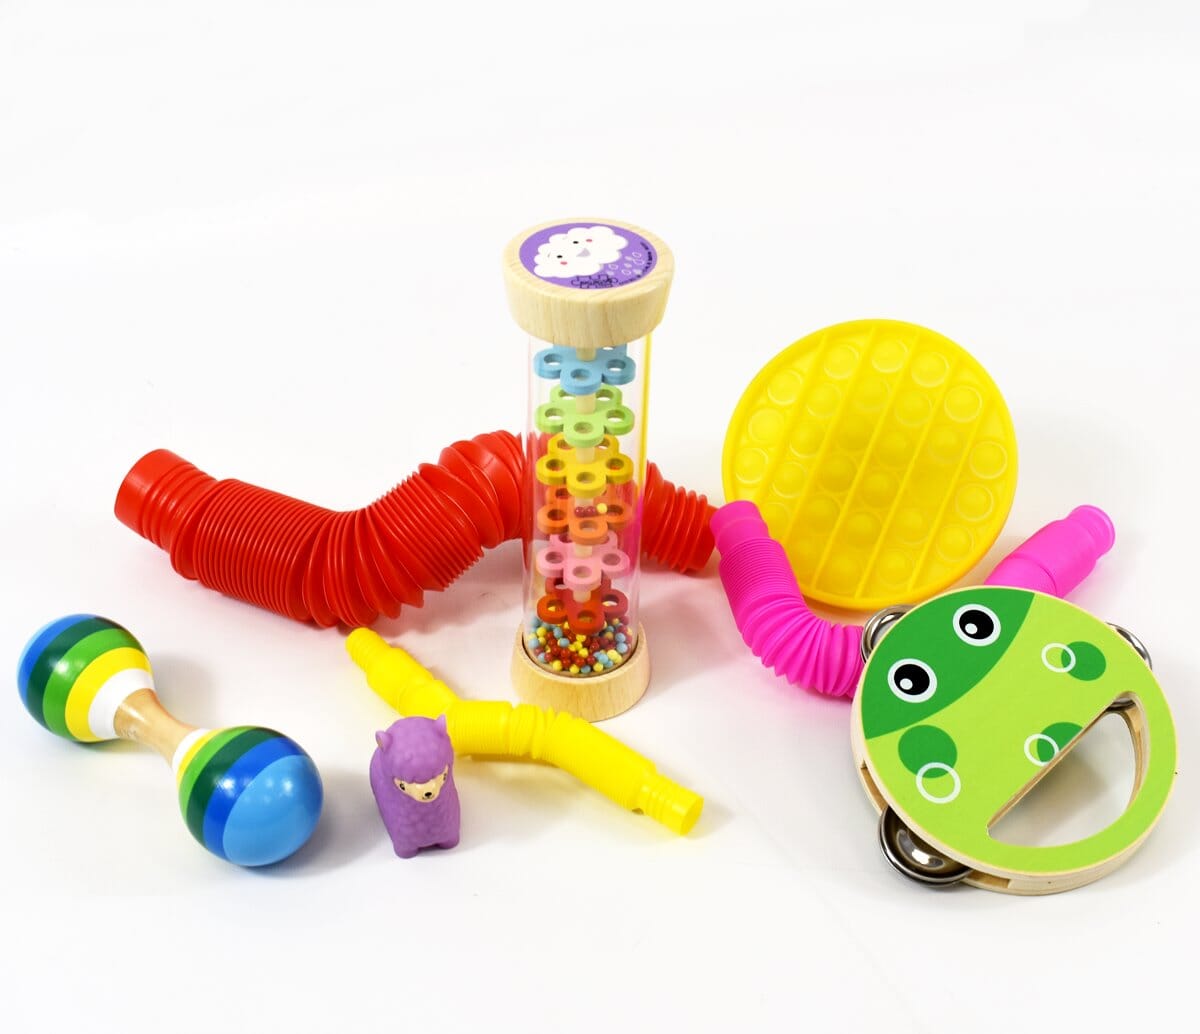 6 Stretchy Centipede Toy Fiddle Fidget Stress Sensory Fun Toy Autism ADHD UK 